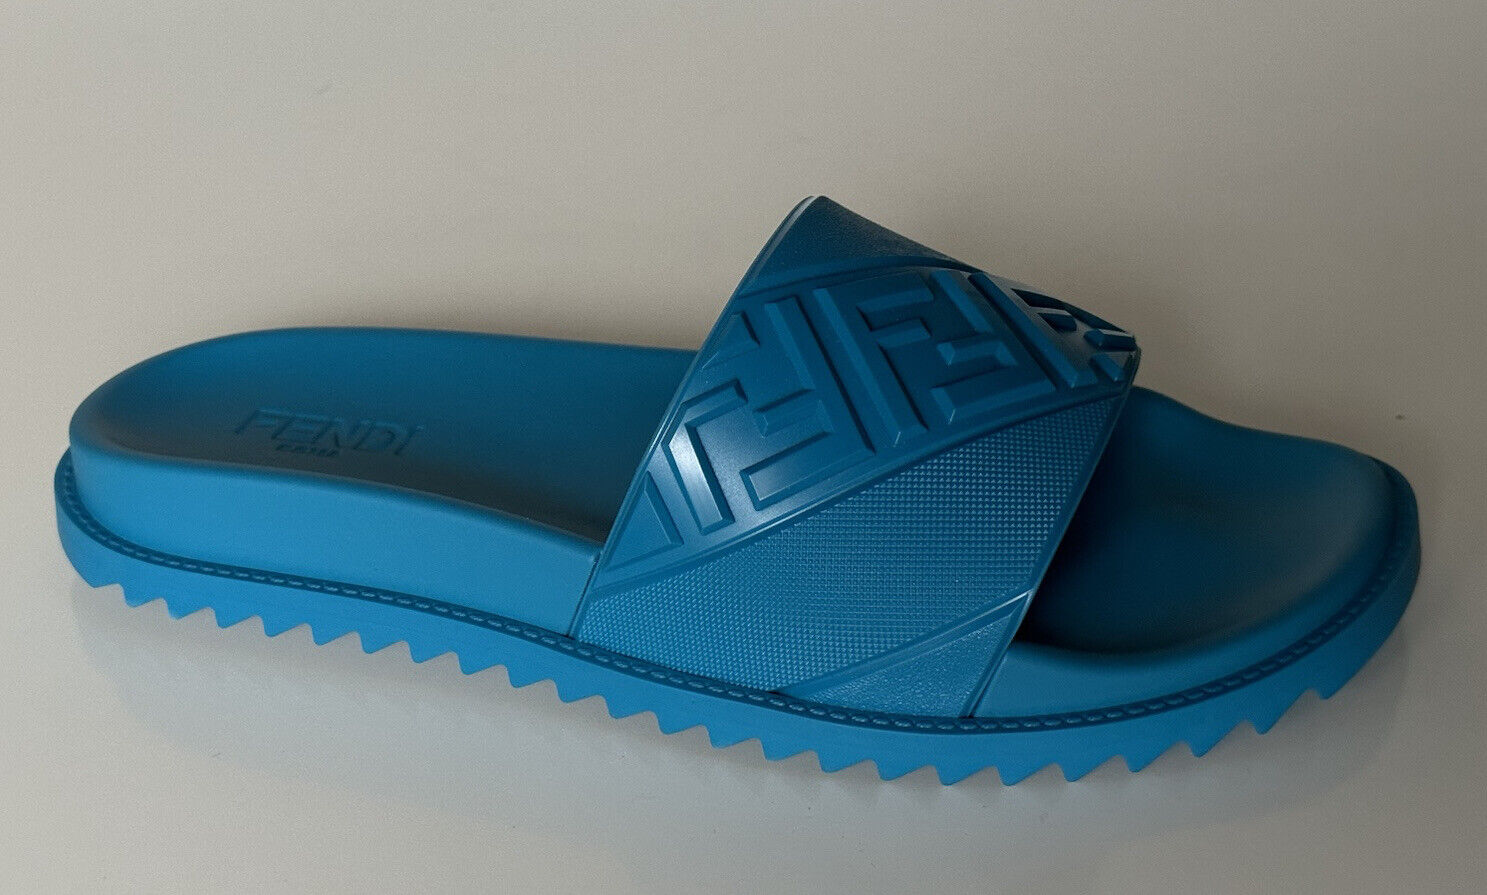 NIB $460 Fendi Men's FF Rubber Slide Sandals Cyber Blue 10 US/9 UK Italy 7X1377